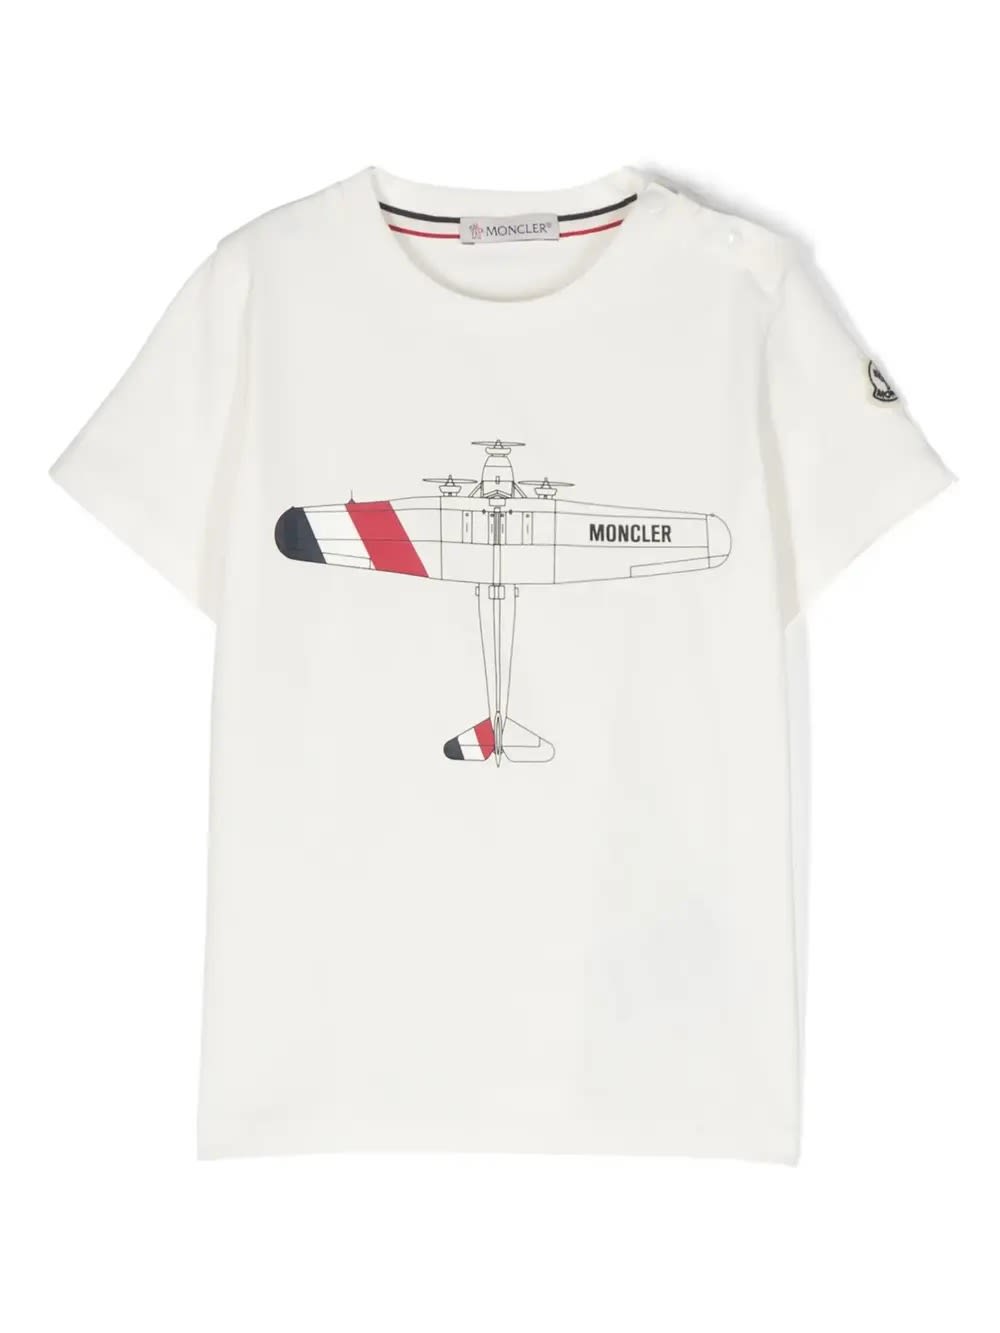 Moncler Babies' White T-shirt With Aeroplane